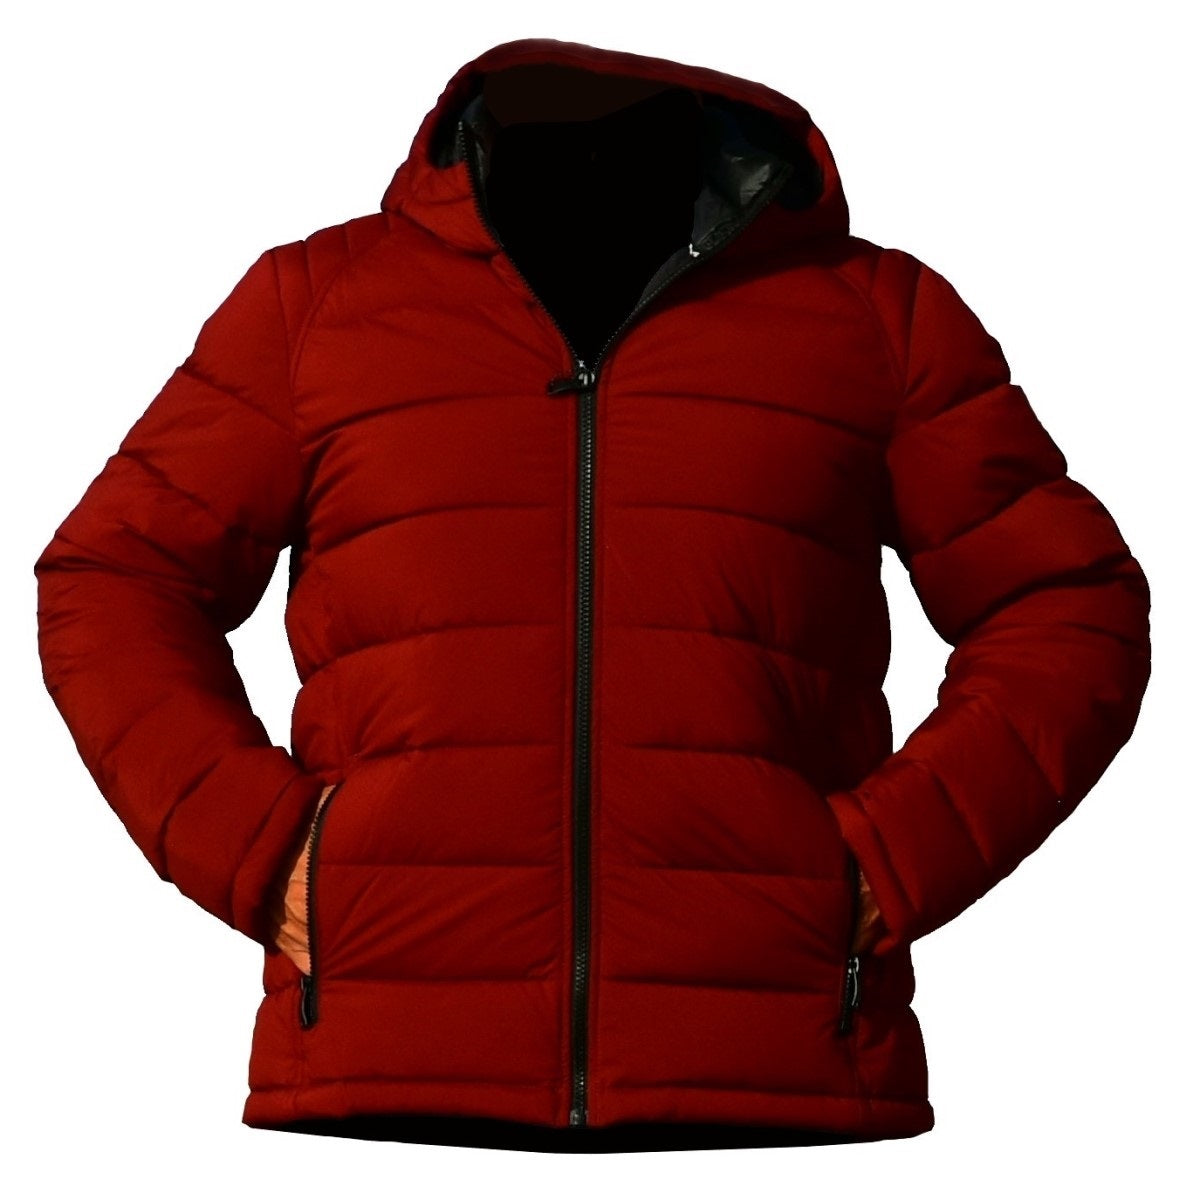 Chamarra para Hombre - TM-W224317 Red Jacket for Men